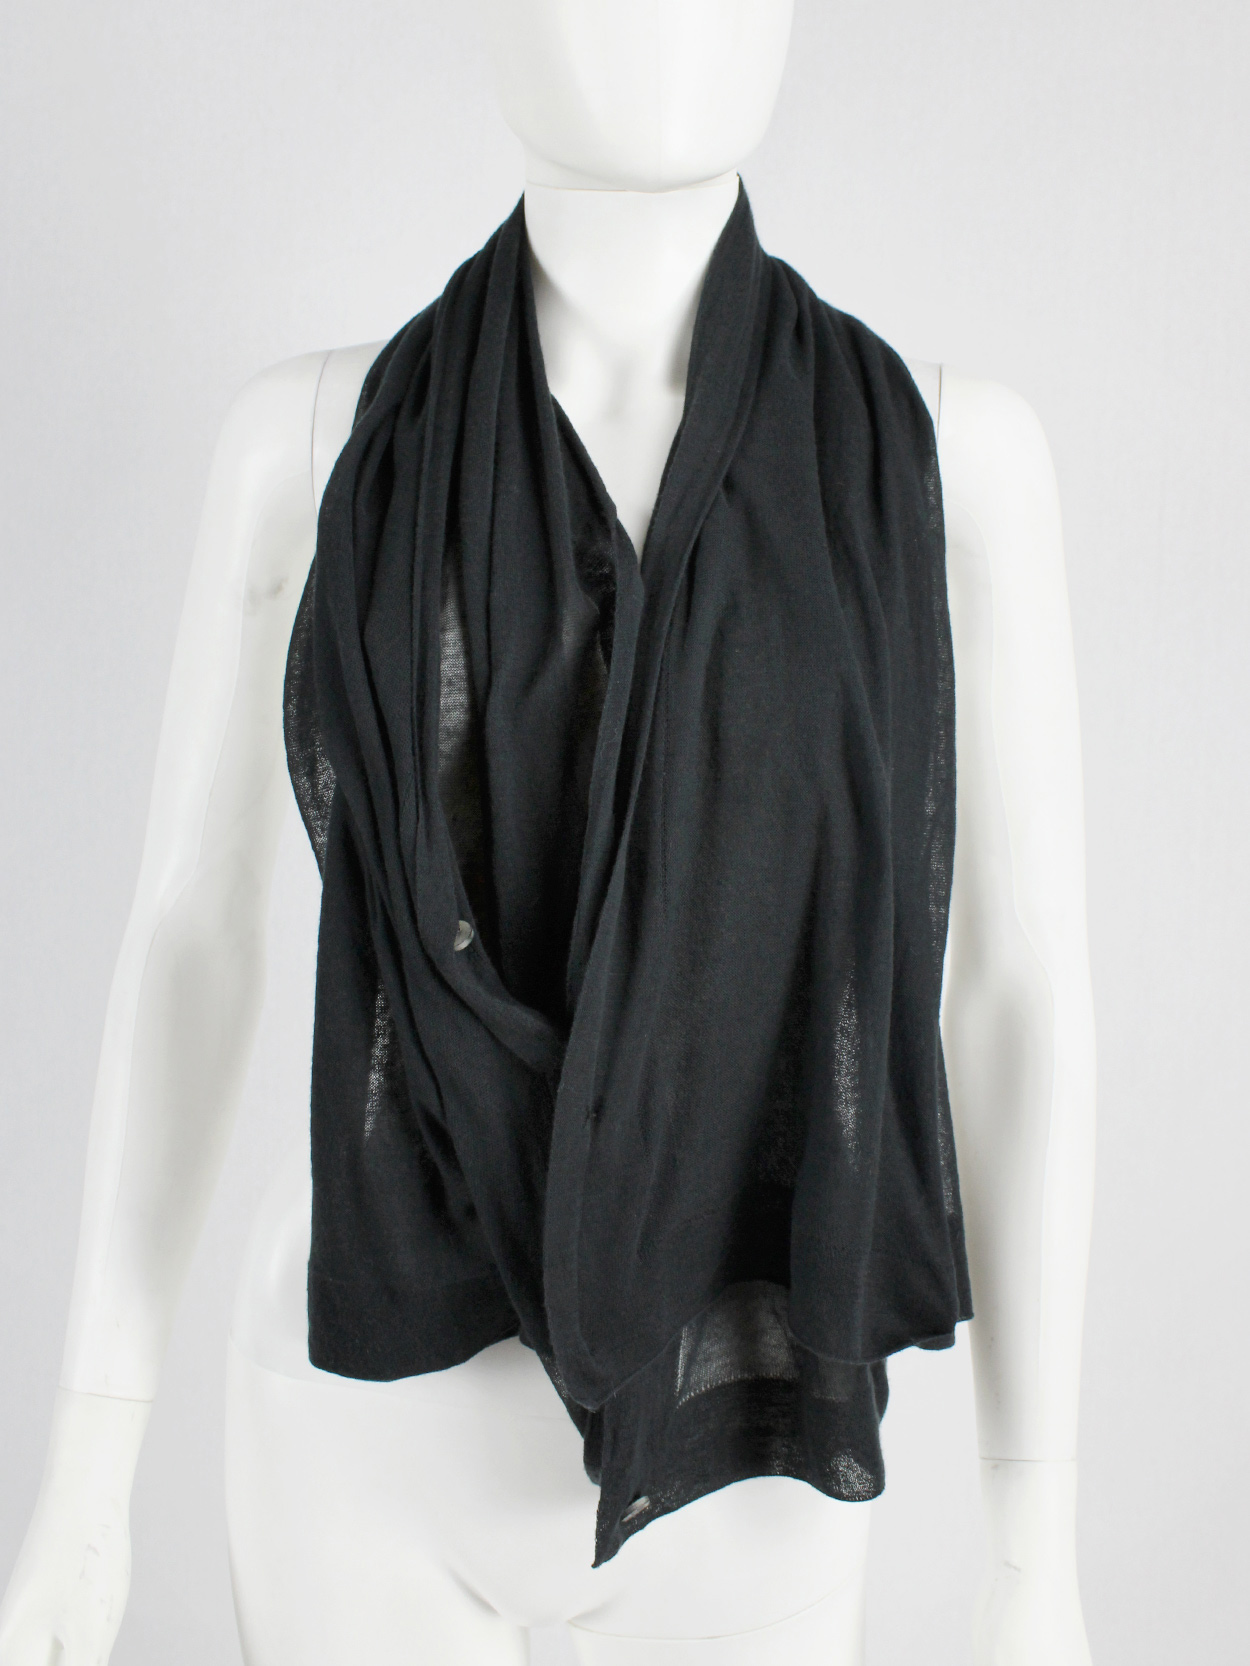 vaniitas Ann Demeulemeester black convertible scarf with buttons (7)